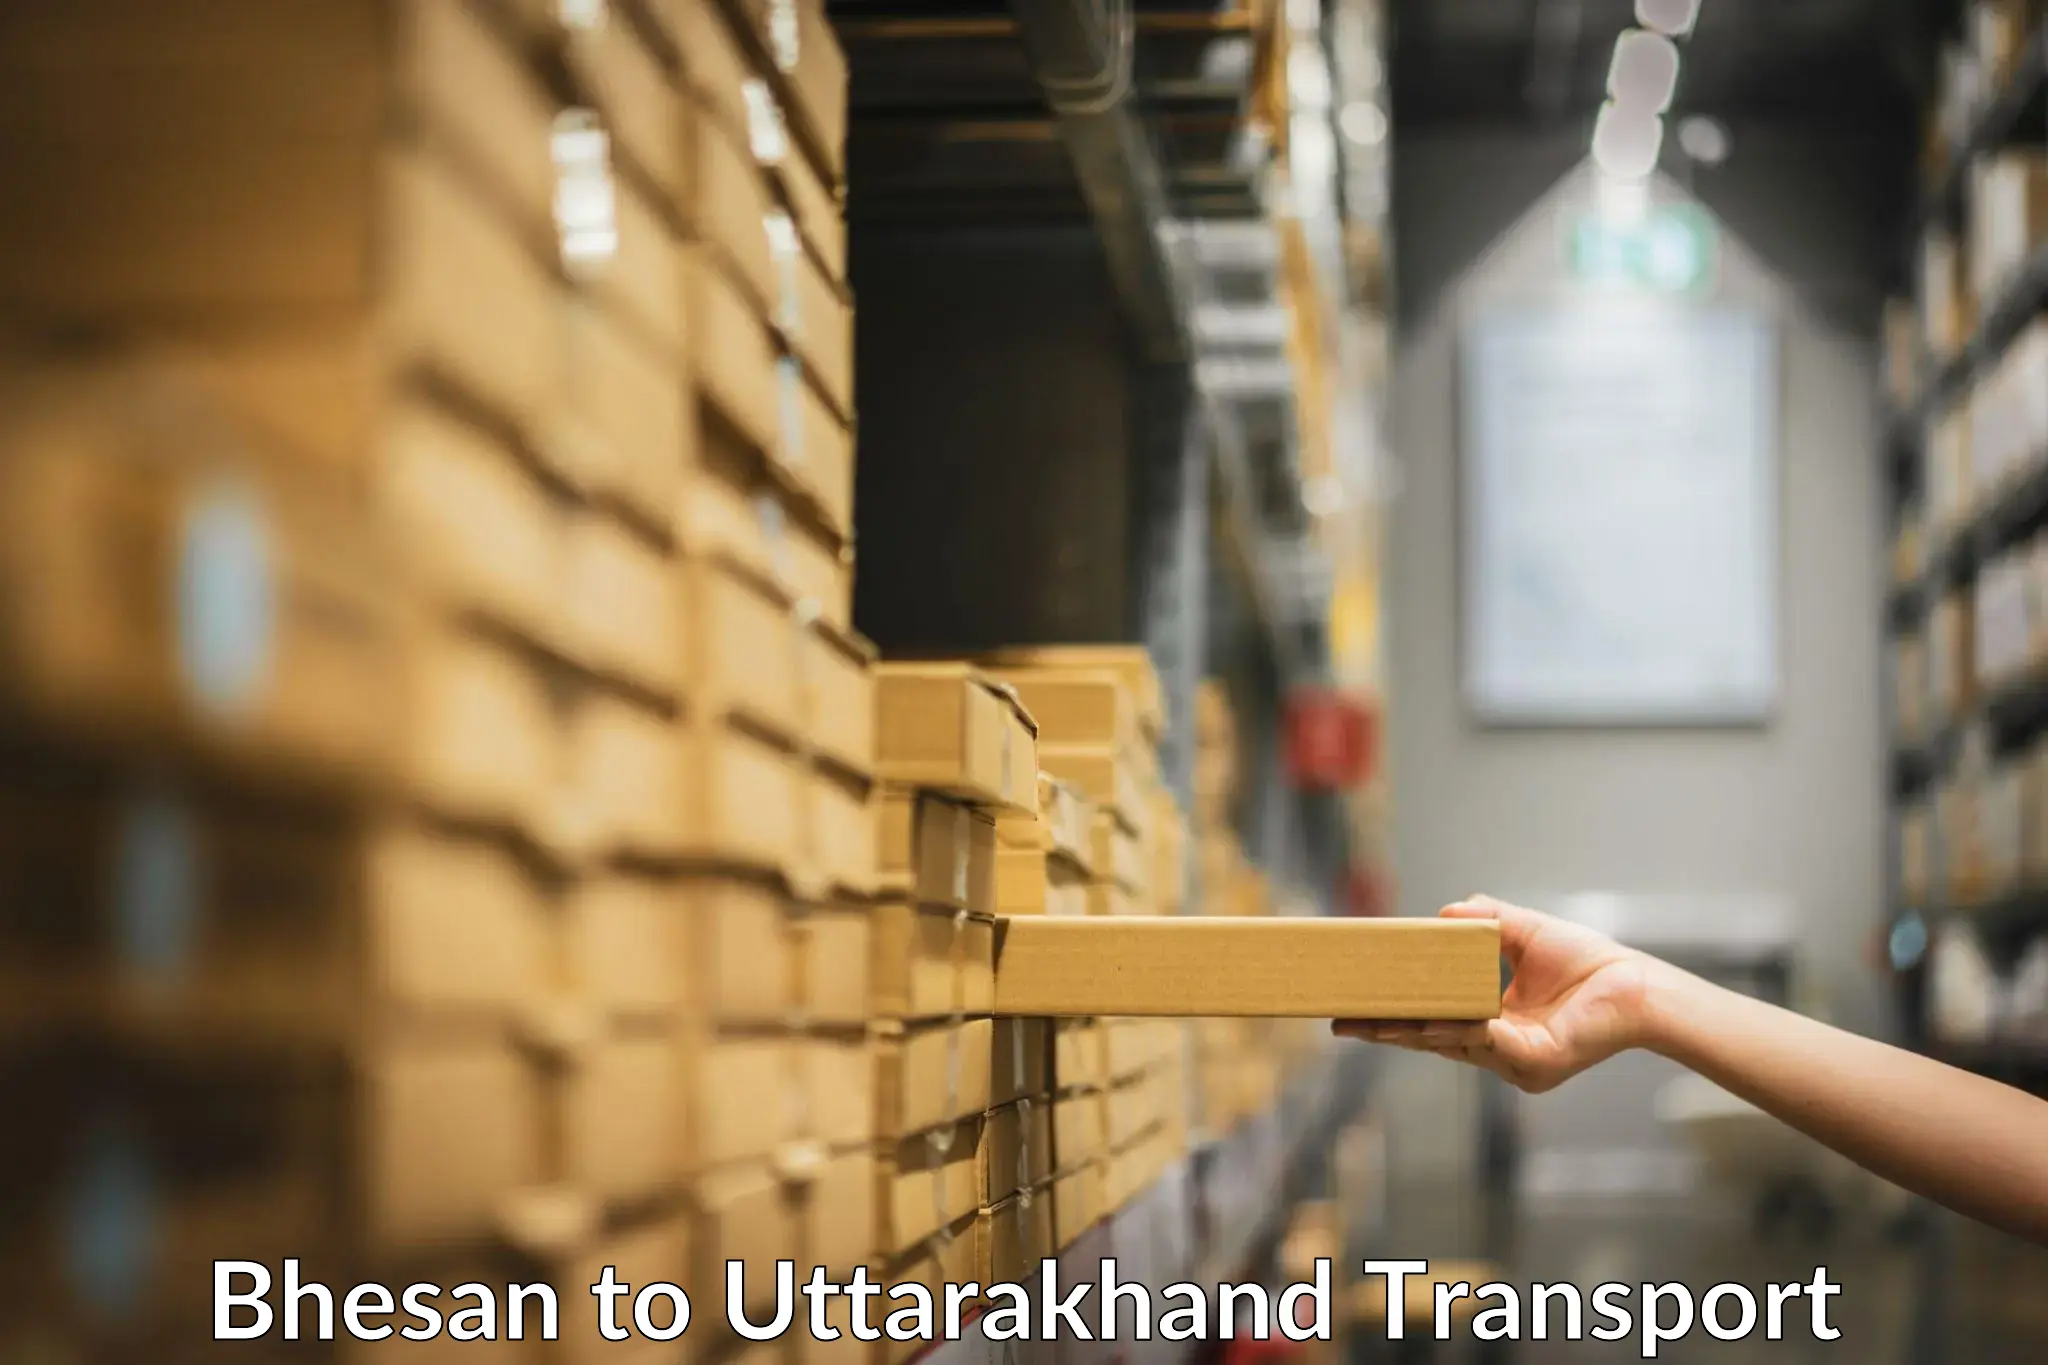 Truck transport companies in India Bhesan to Uttarakhand